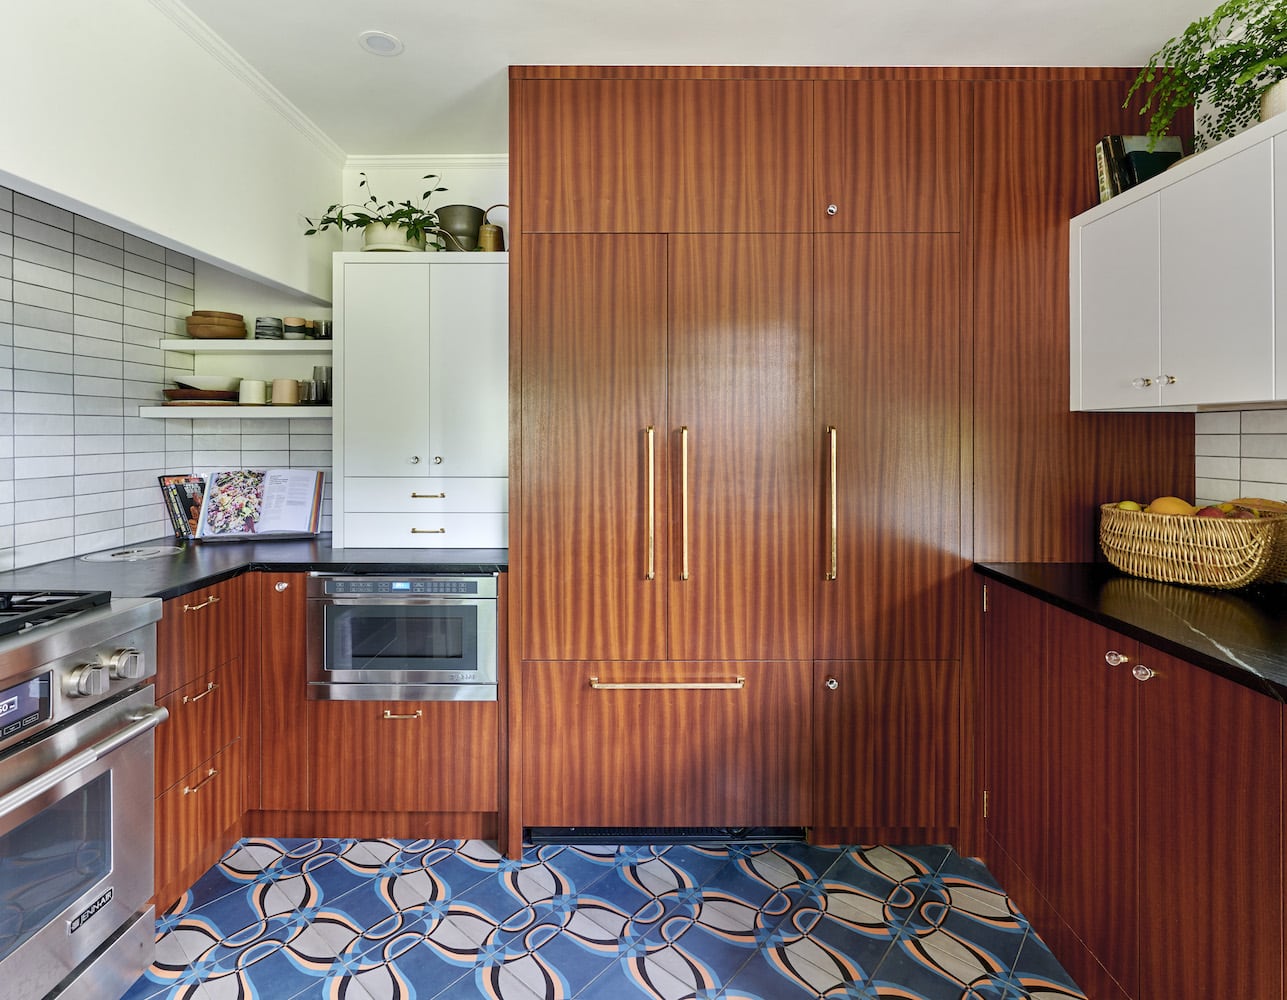 Kitchen with sapele cabinets, patterned floor tile, panel fridge, appliances